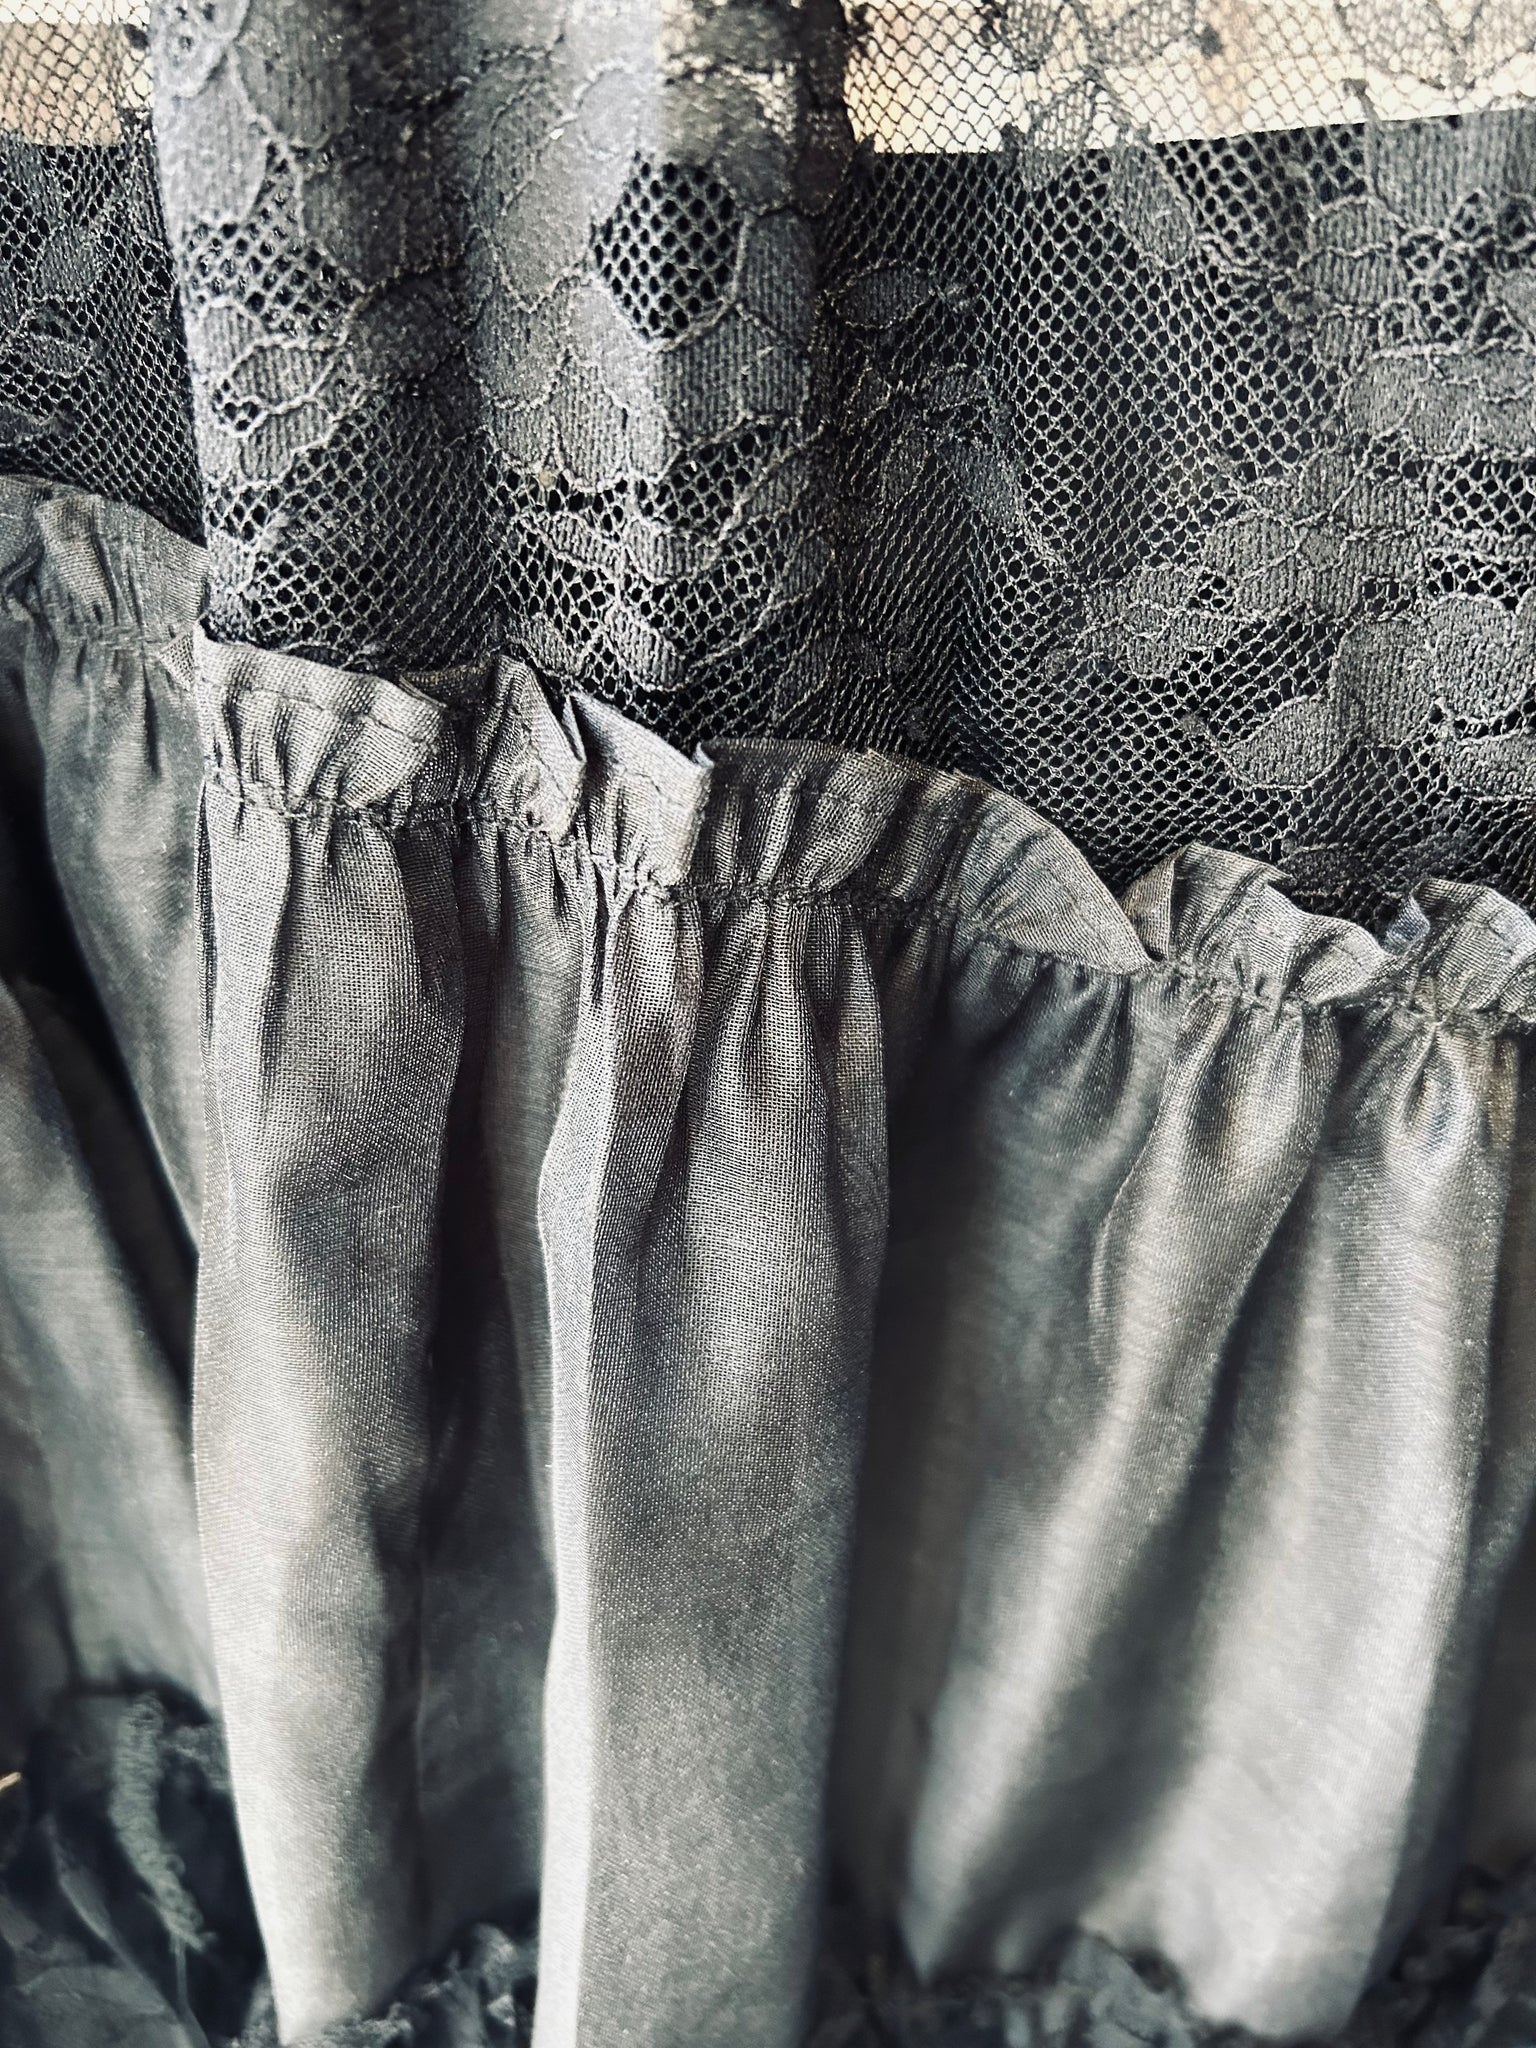 Alessia Floral Lace Asymmetric Midi Dress